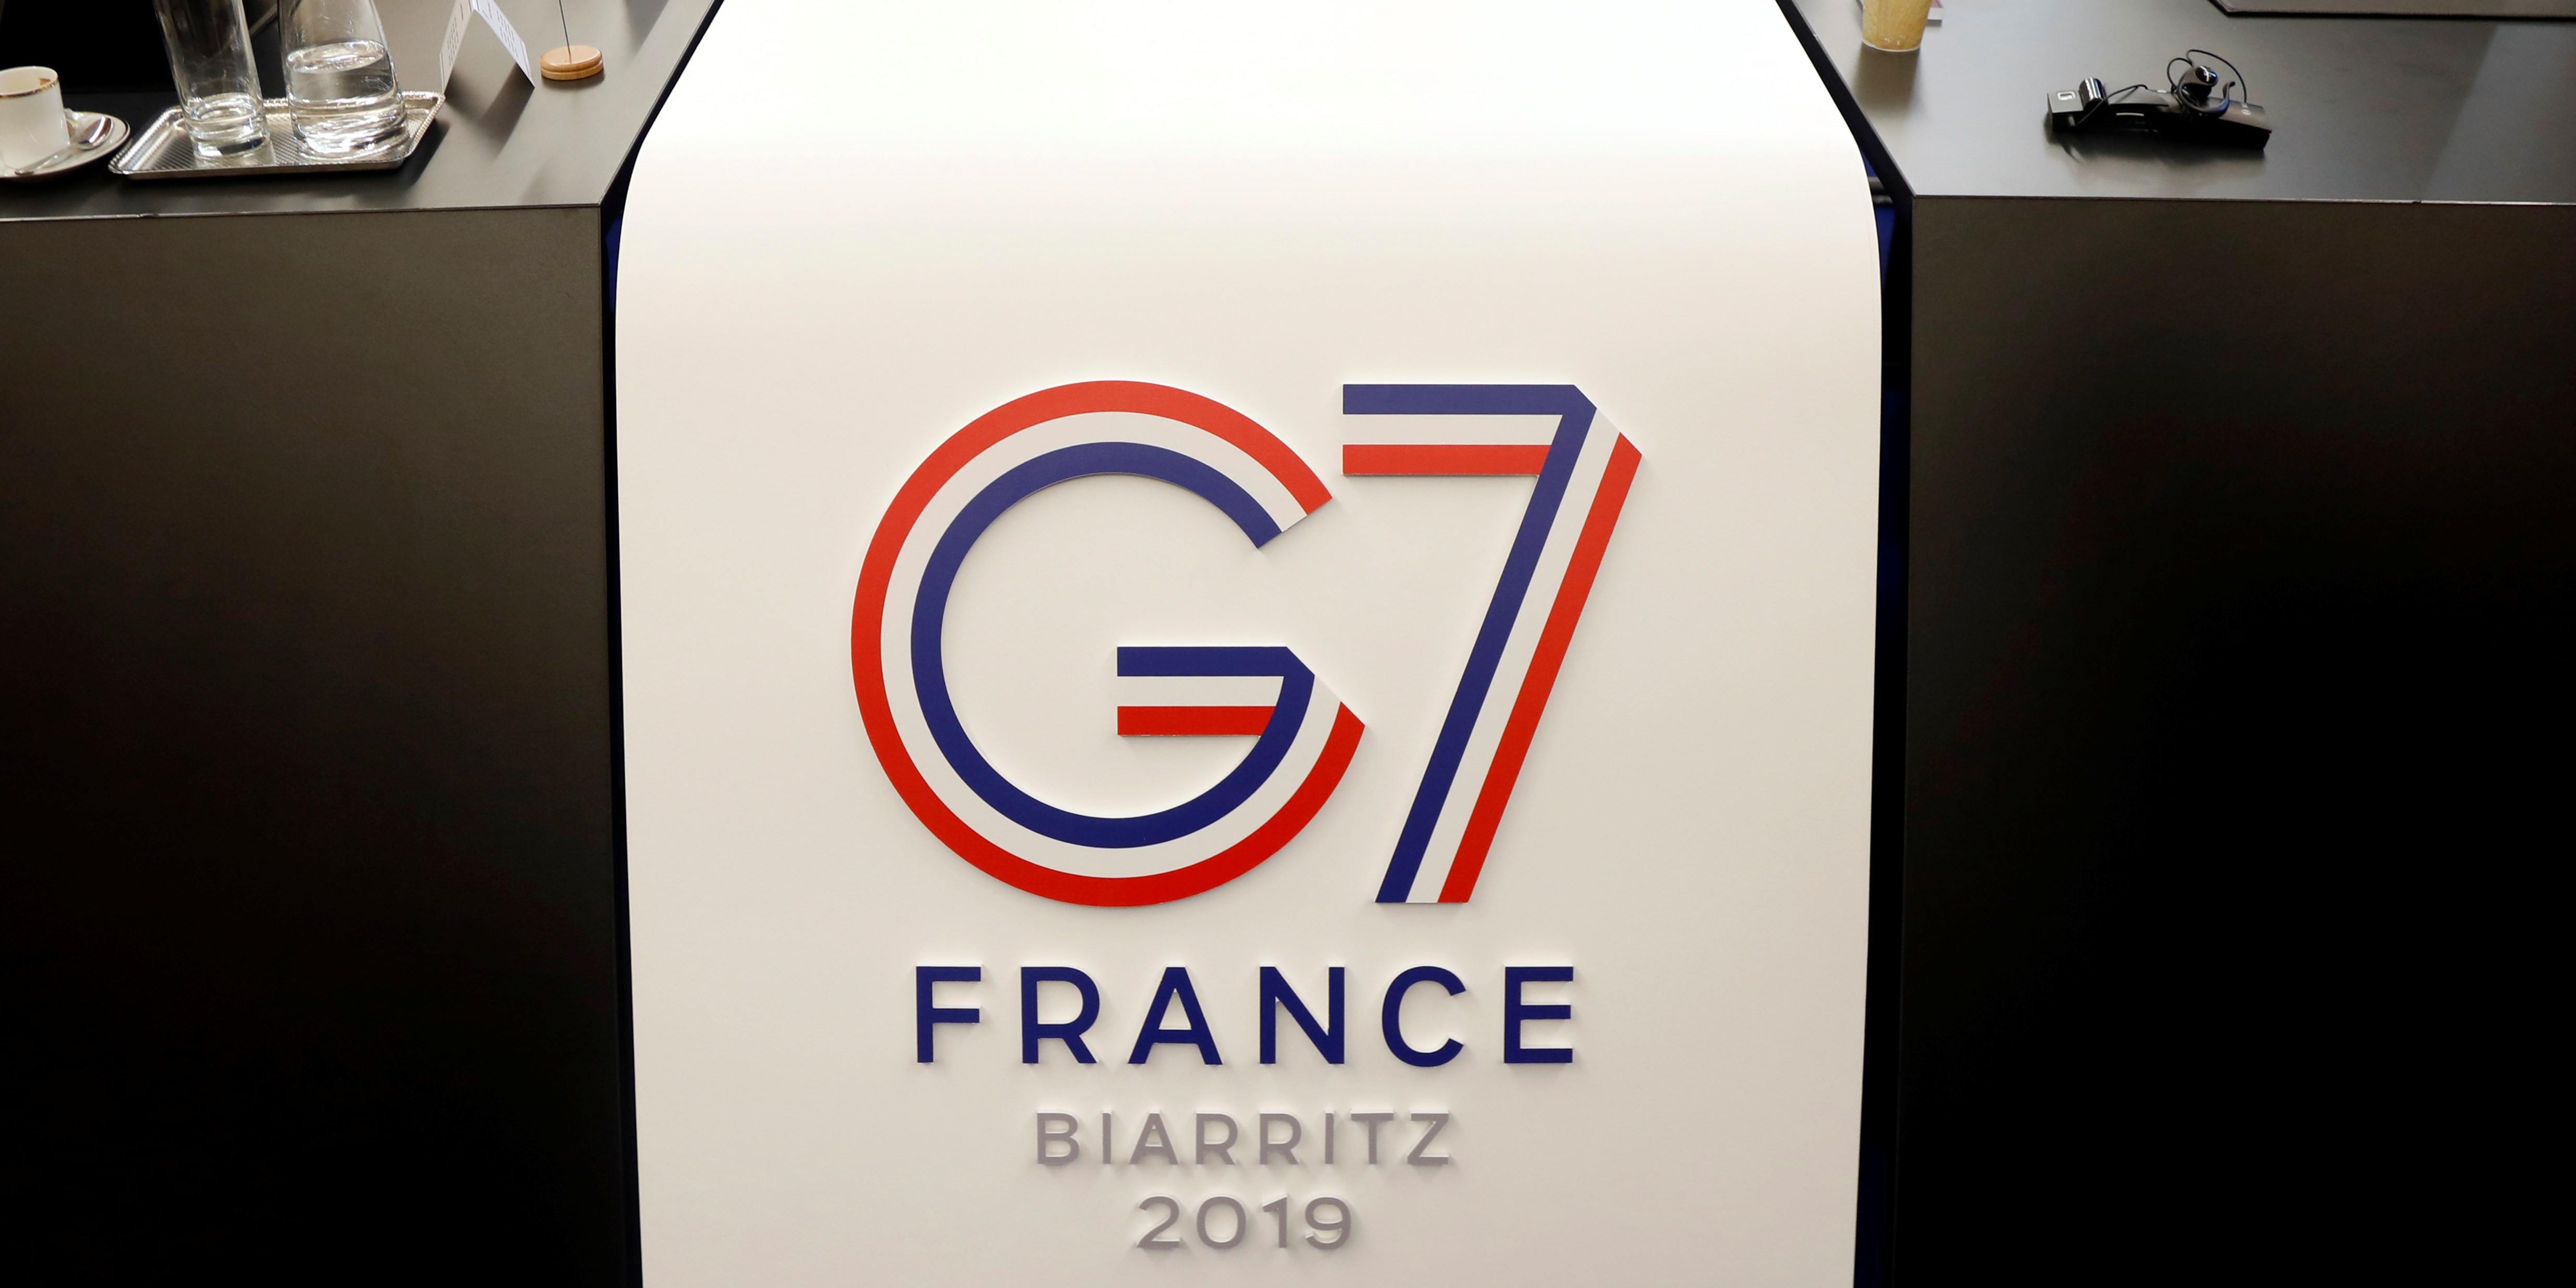 https://img3.s3wfg.com/web/img/images_uploaded/e/a/g7-biarritz-sommet.png